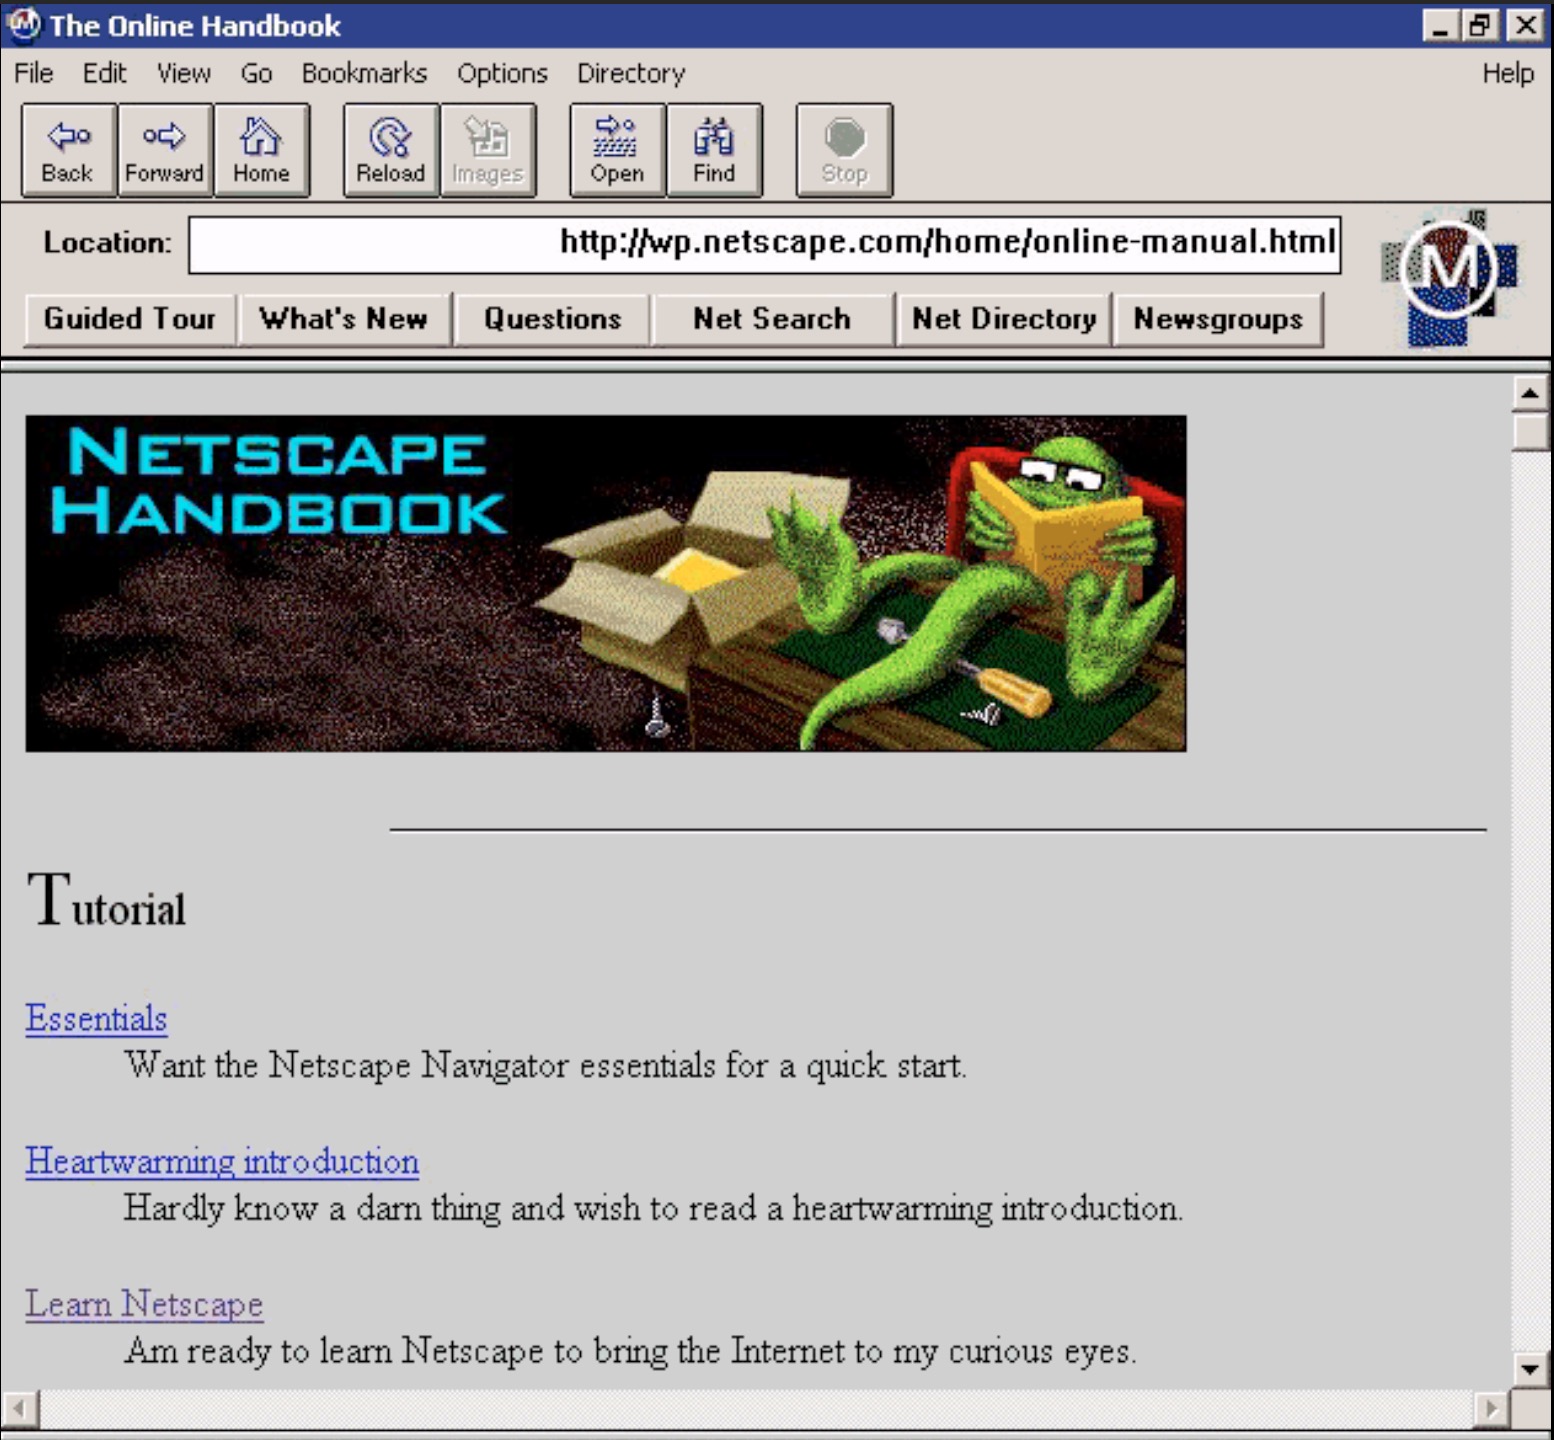 Netscape Handbook online tutorial